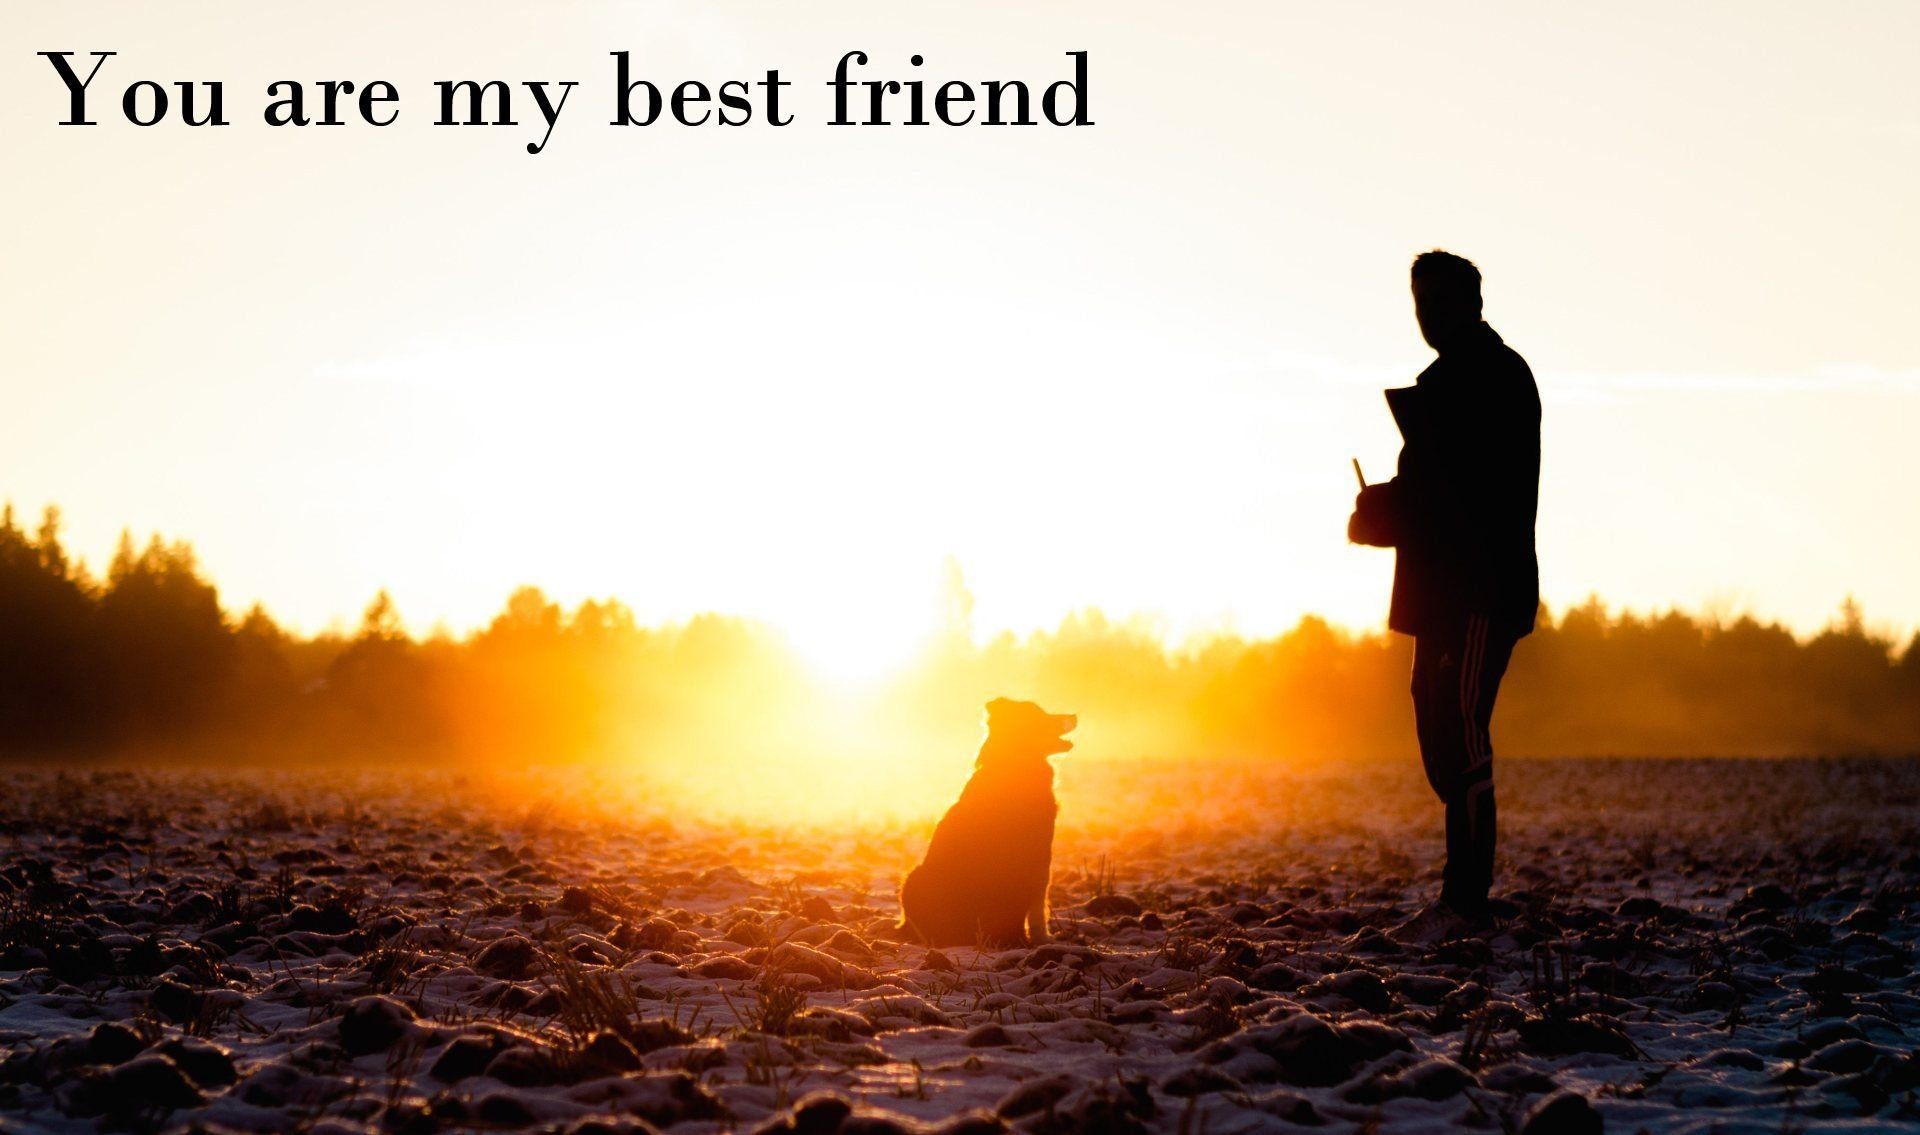 Best Friends Forever Wallpapers Wallpaper 1920ã1200 - Dog Your Best Friend - HD Wallpaper 